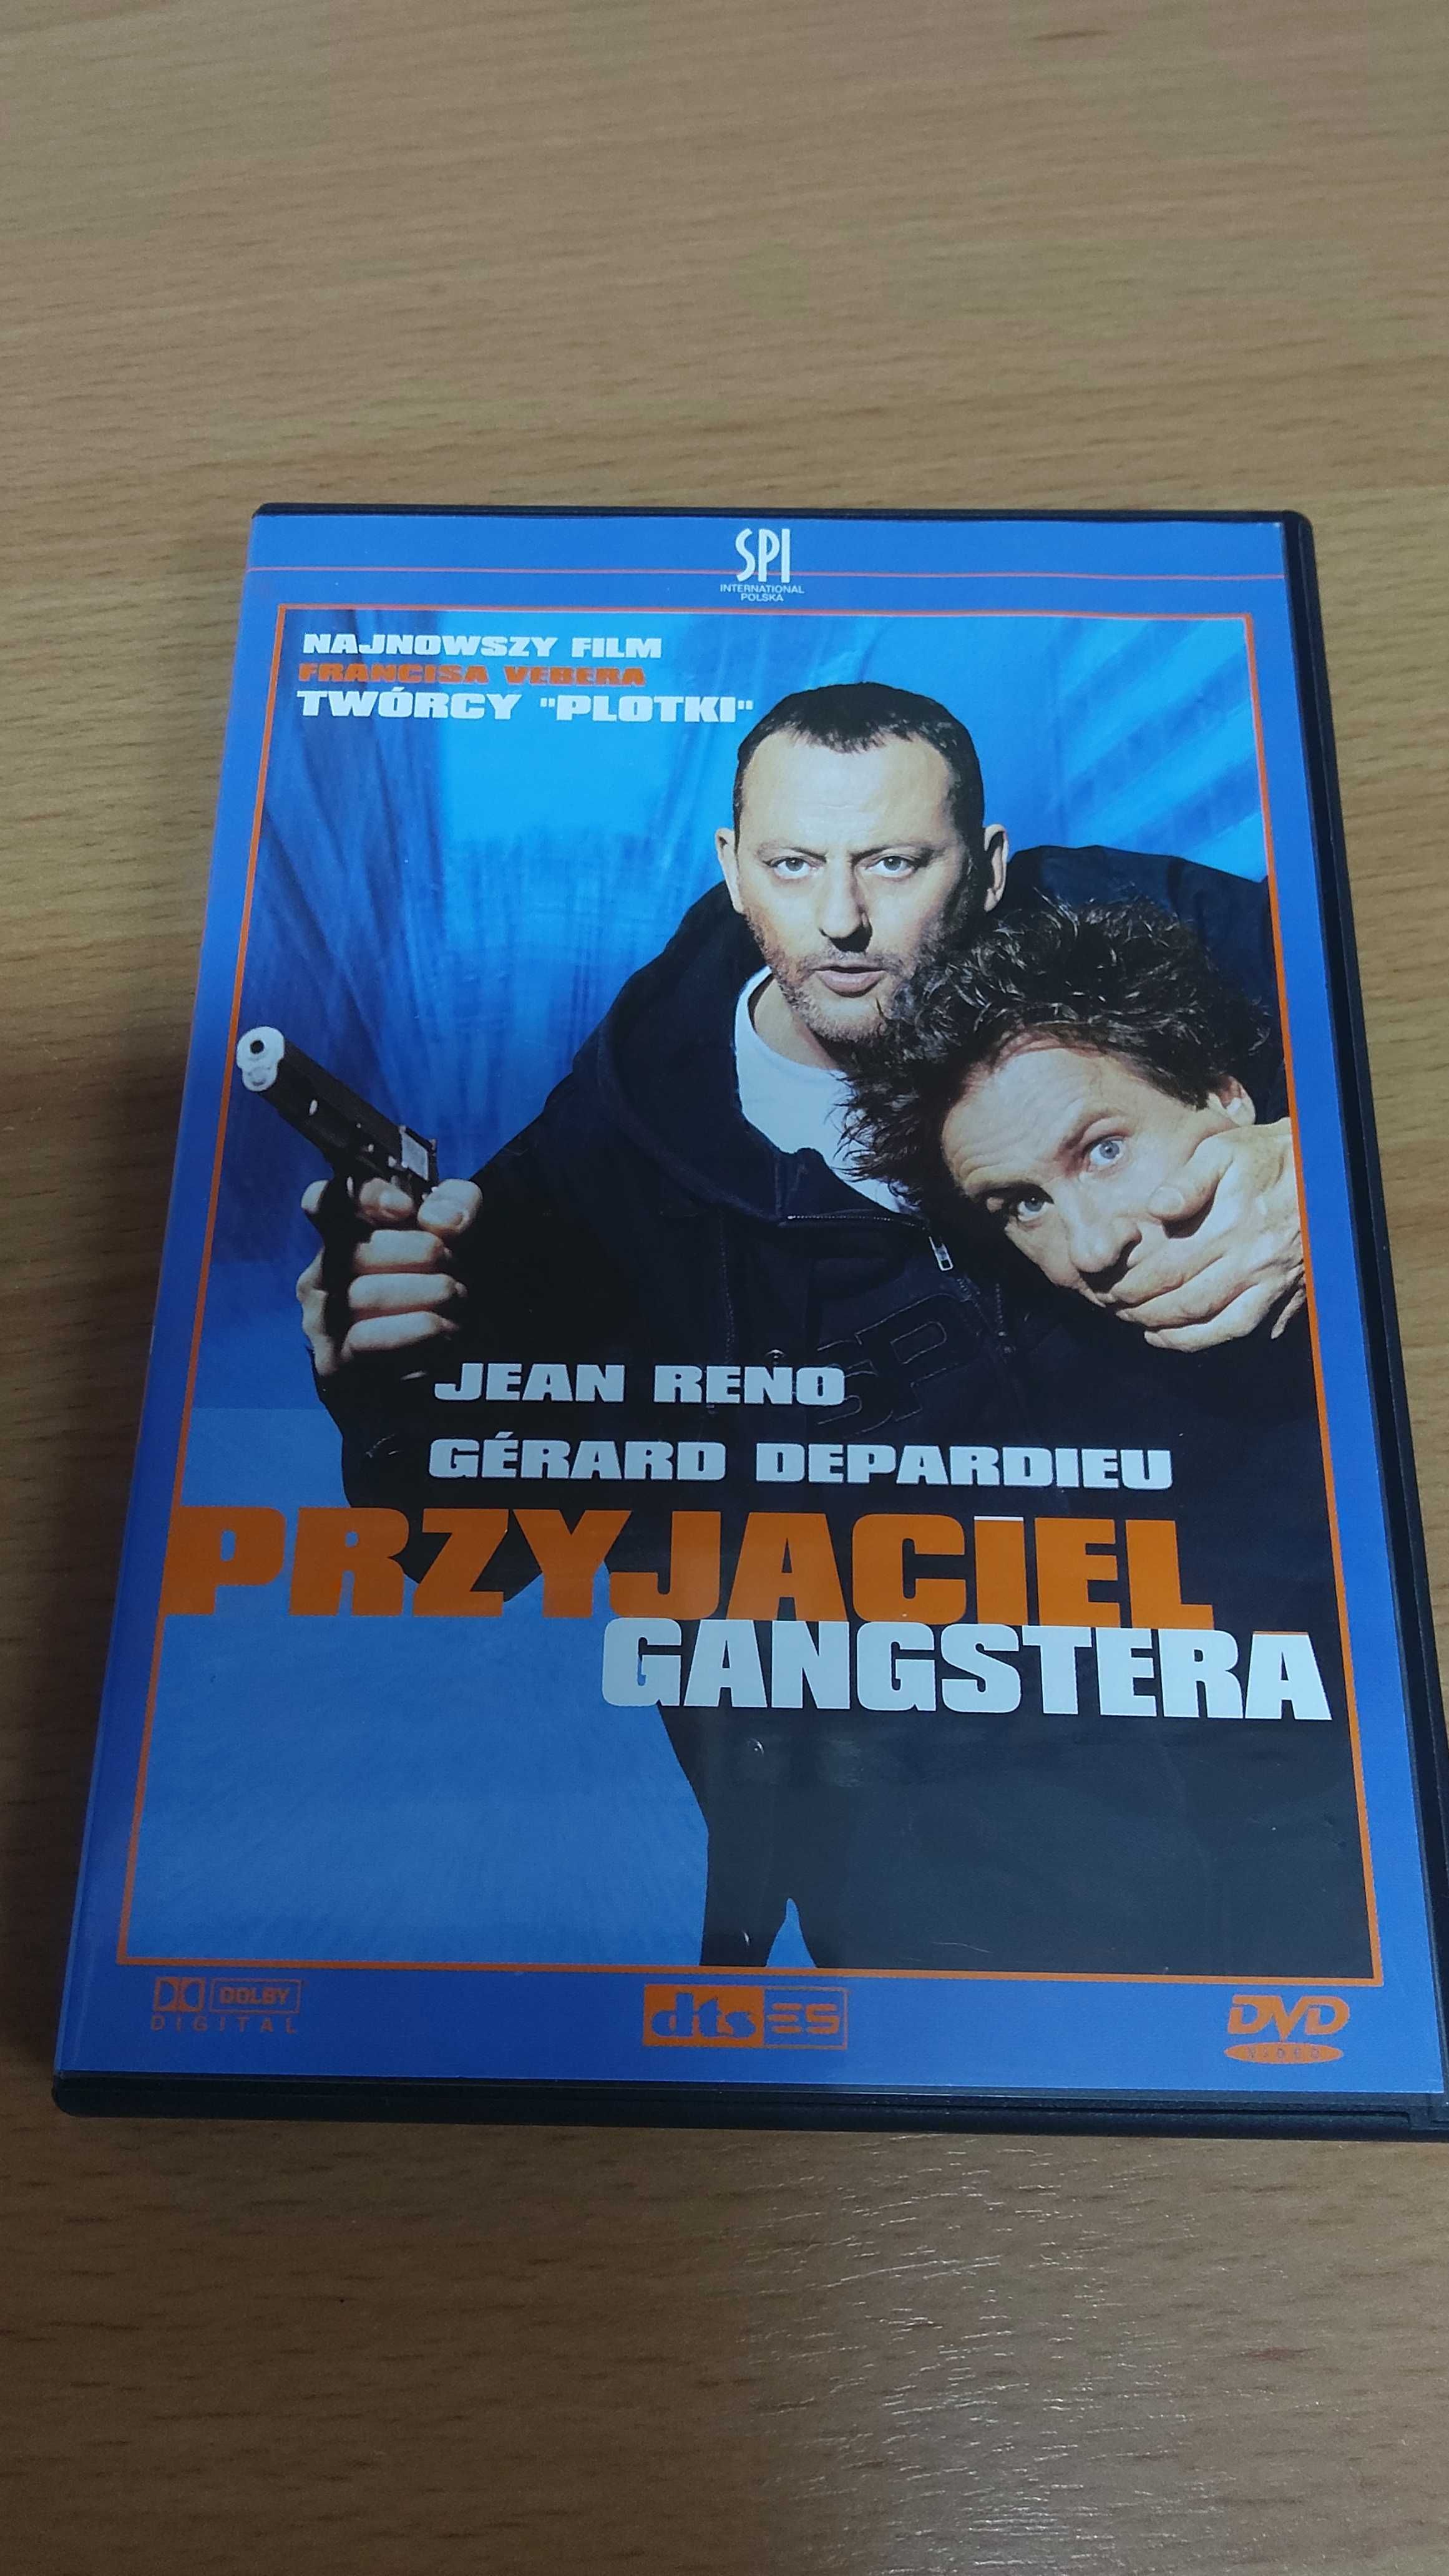 Kino francuskie pakiet 4 dvd Depardieu Przyjaciel gangstera Vatel Rrr